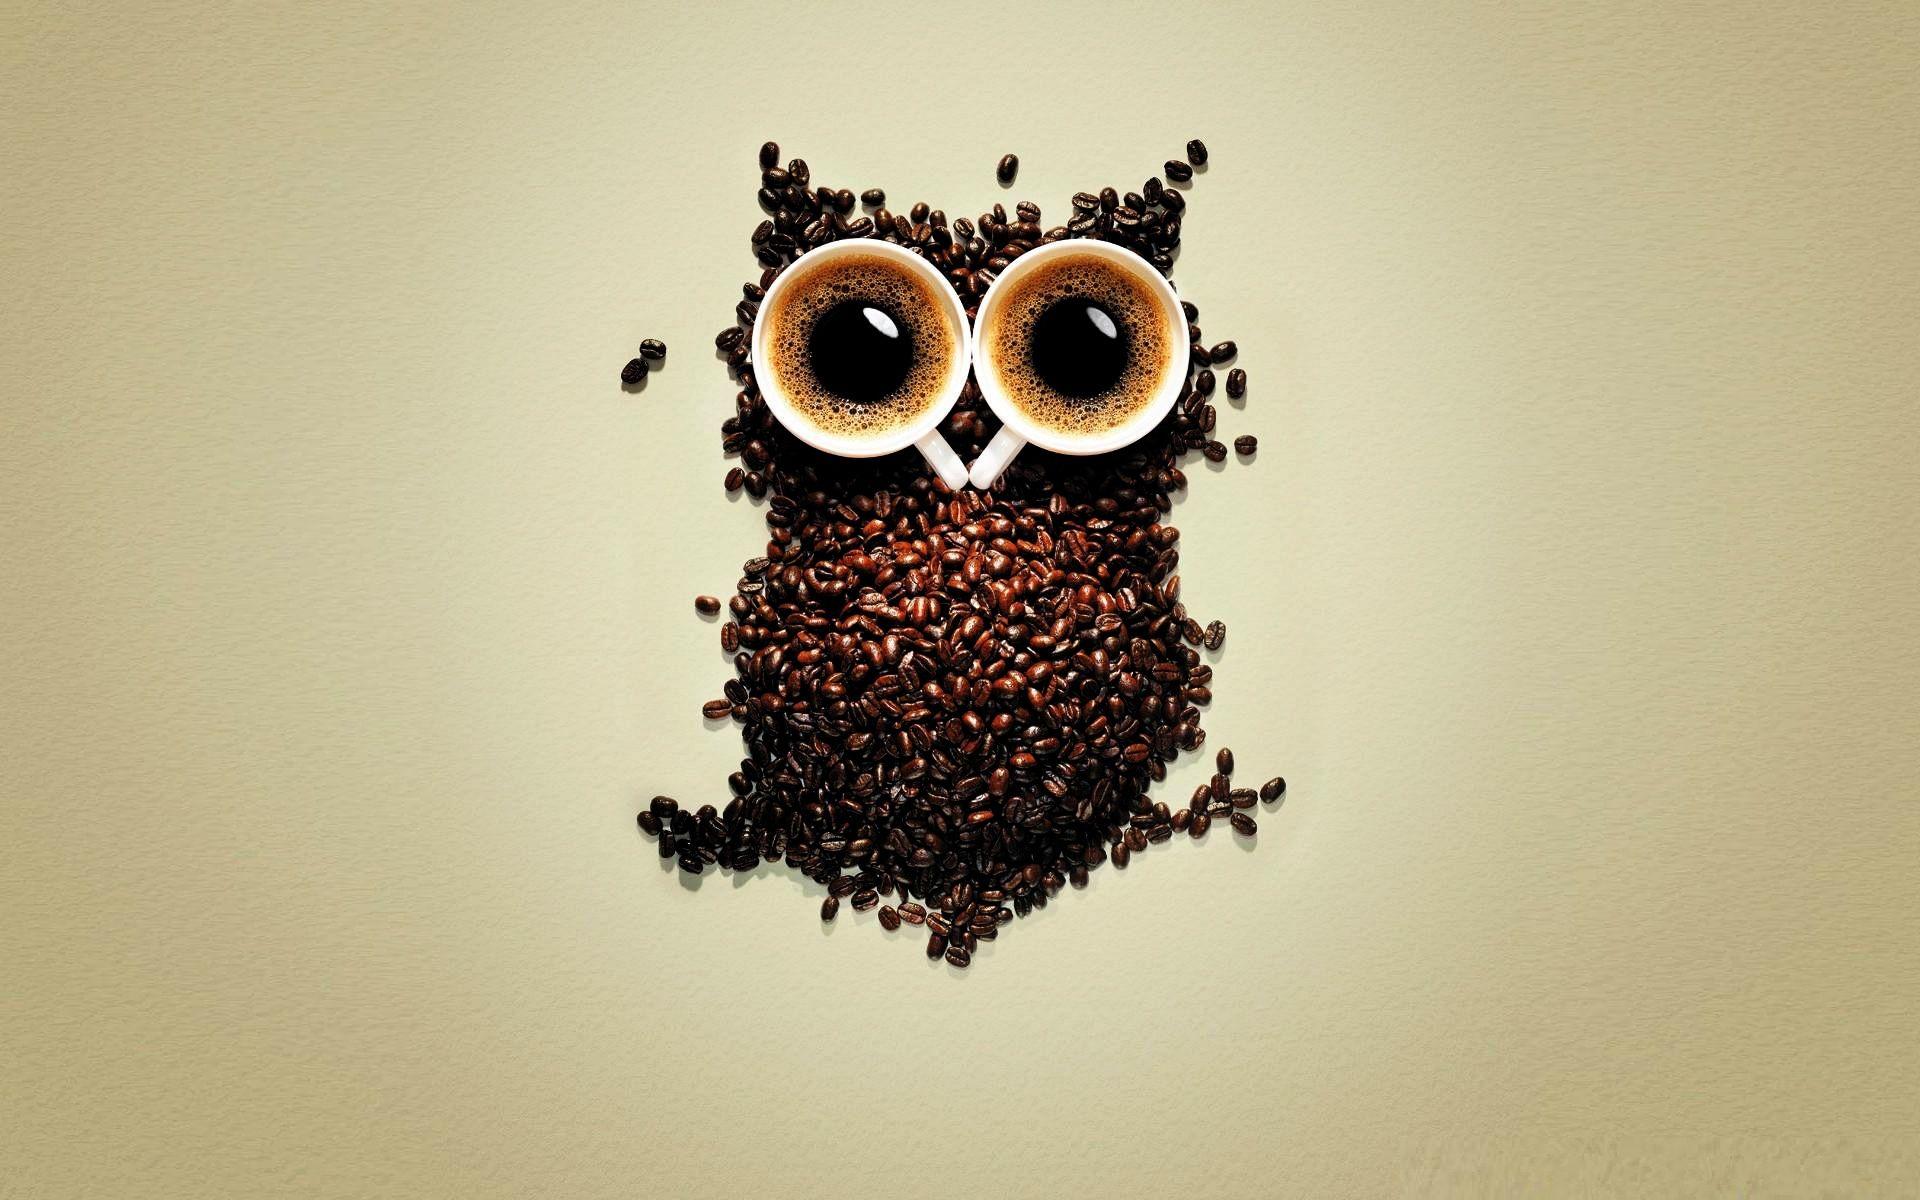 Funny Coffee Owl Wallpaper For Mobile. Download Desktop Background